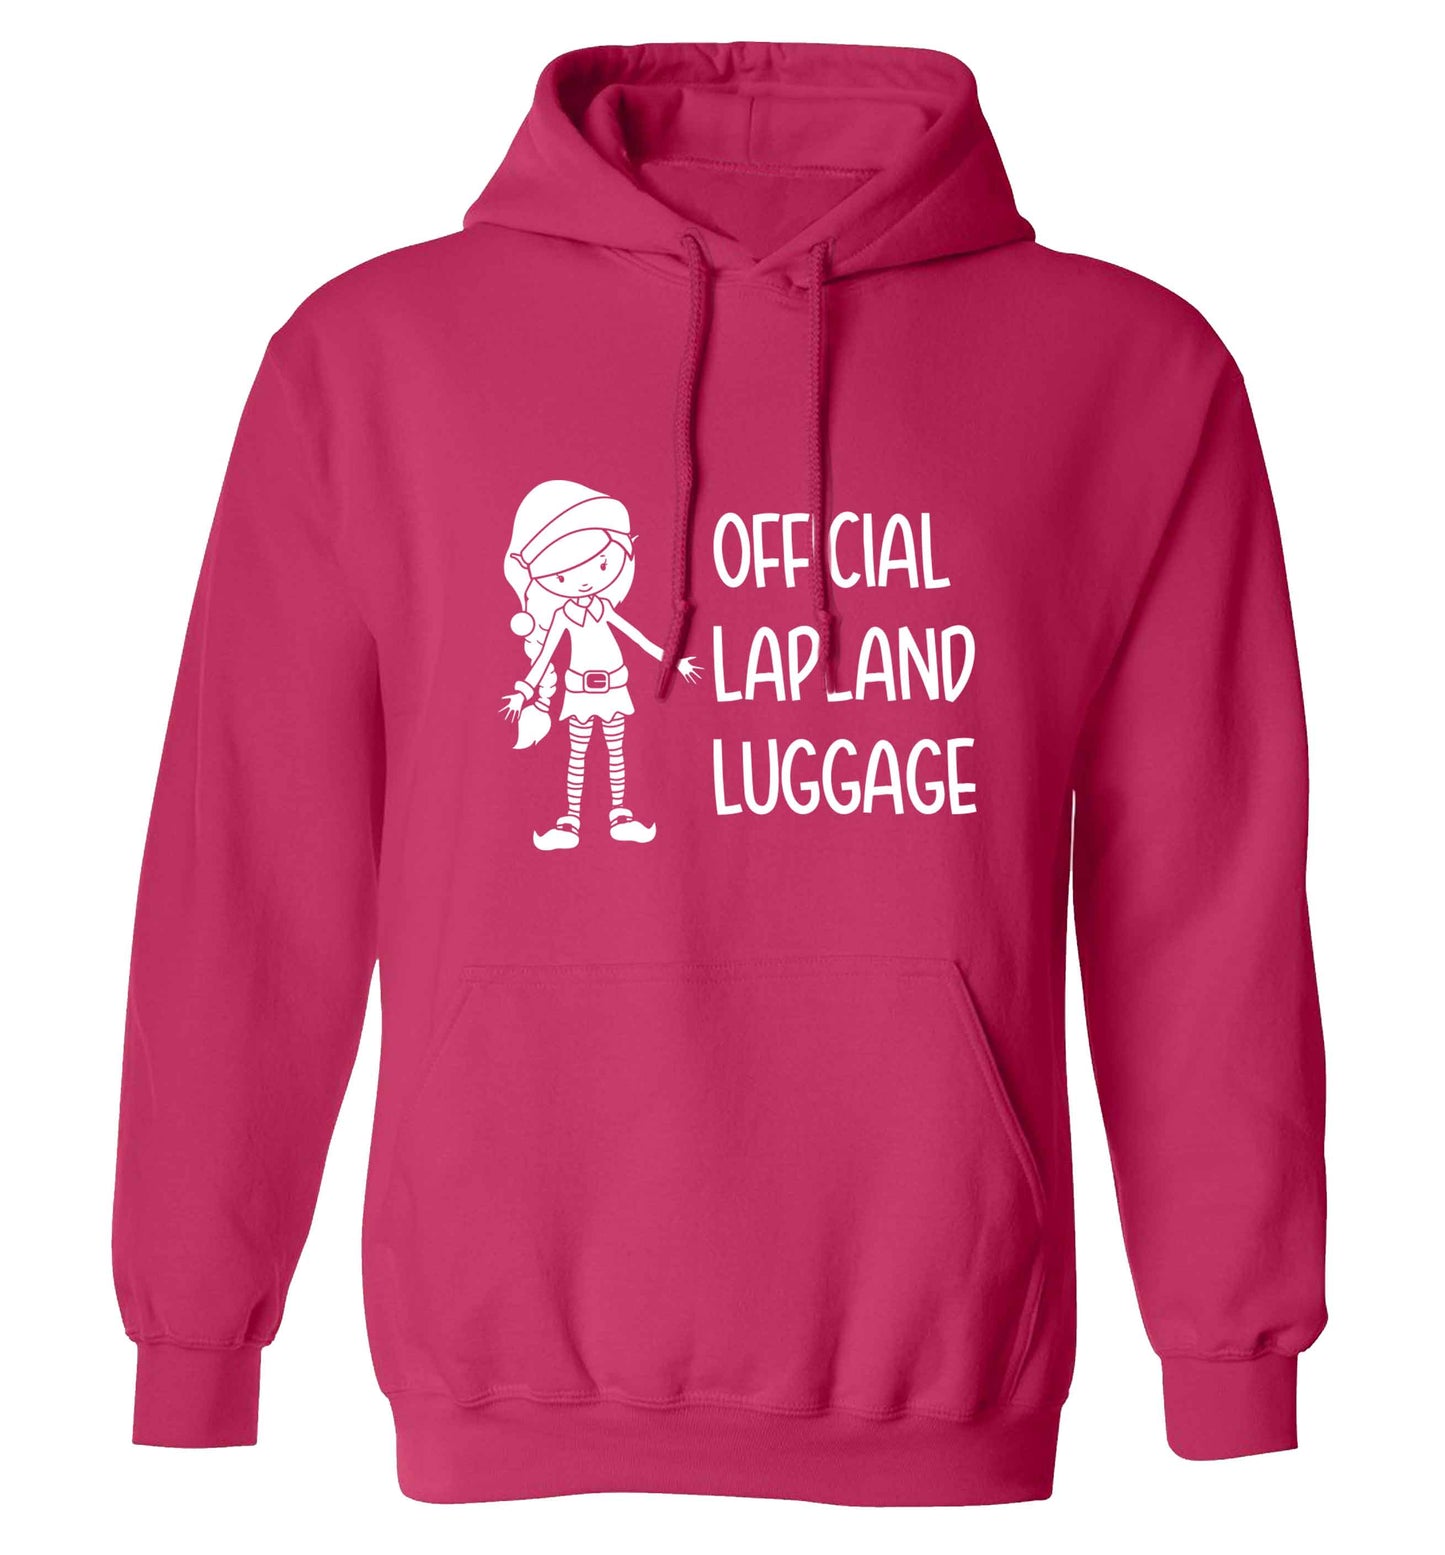 Official lapland luggage - Elf snowflake adults unisex pink hoodie 2XL